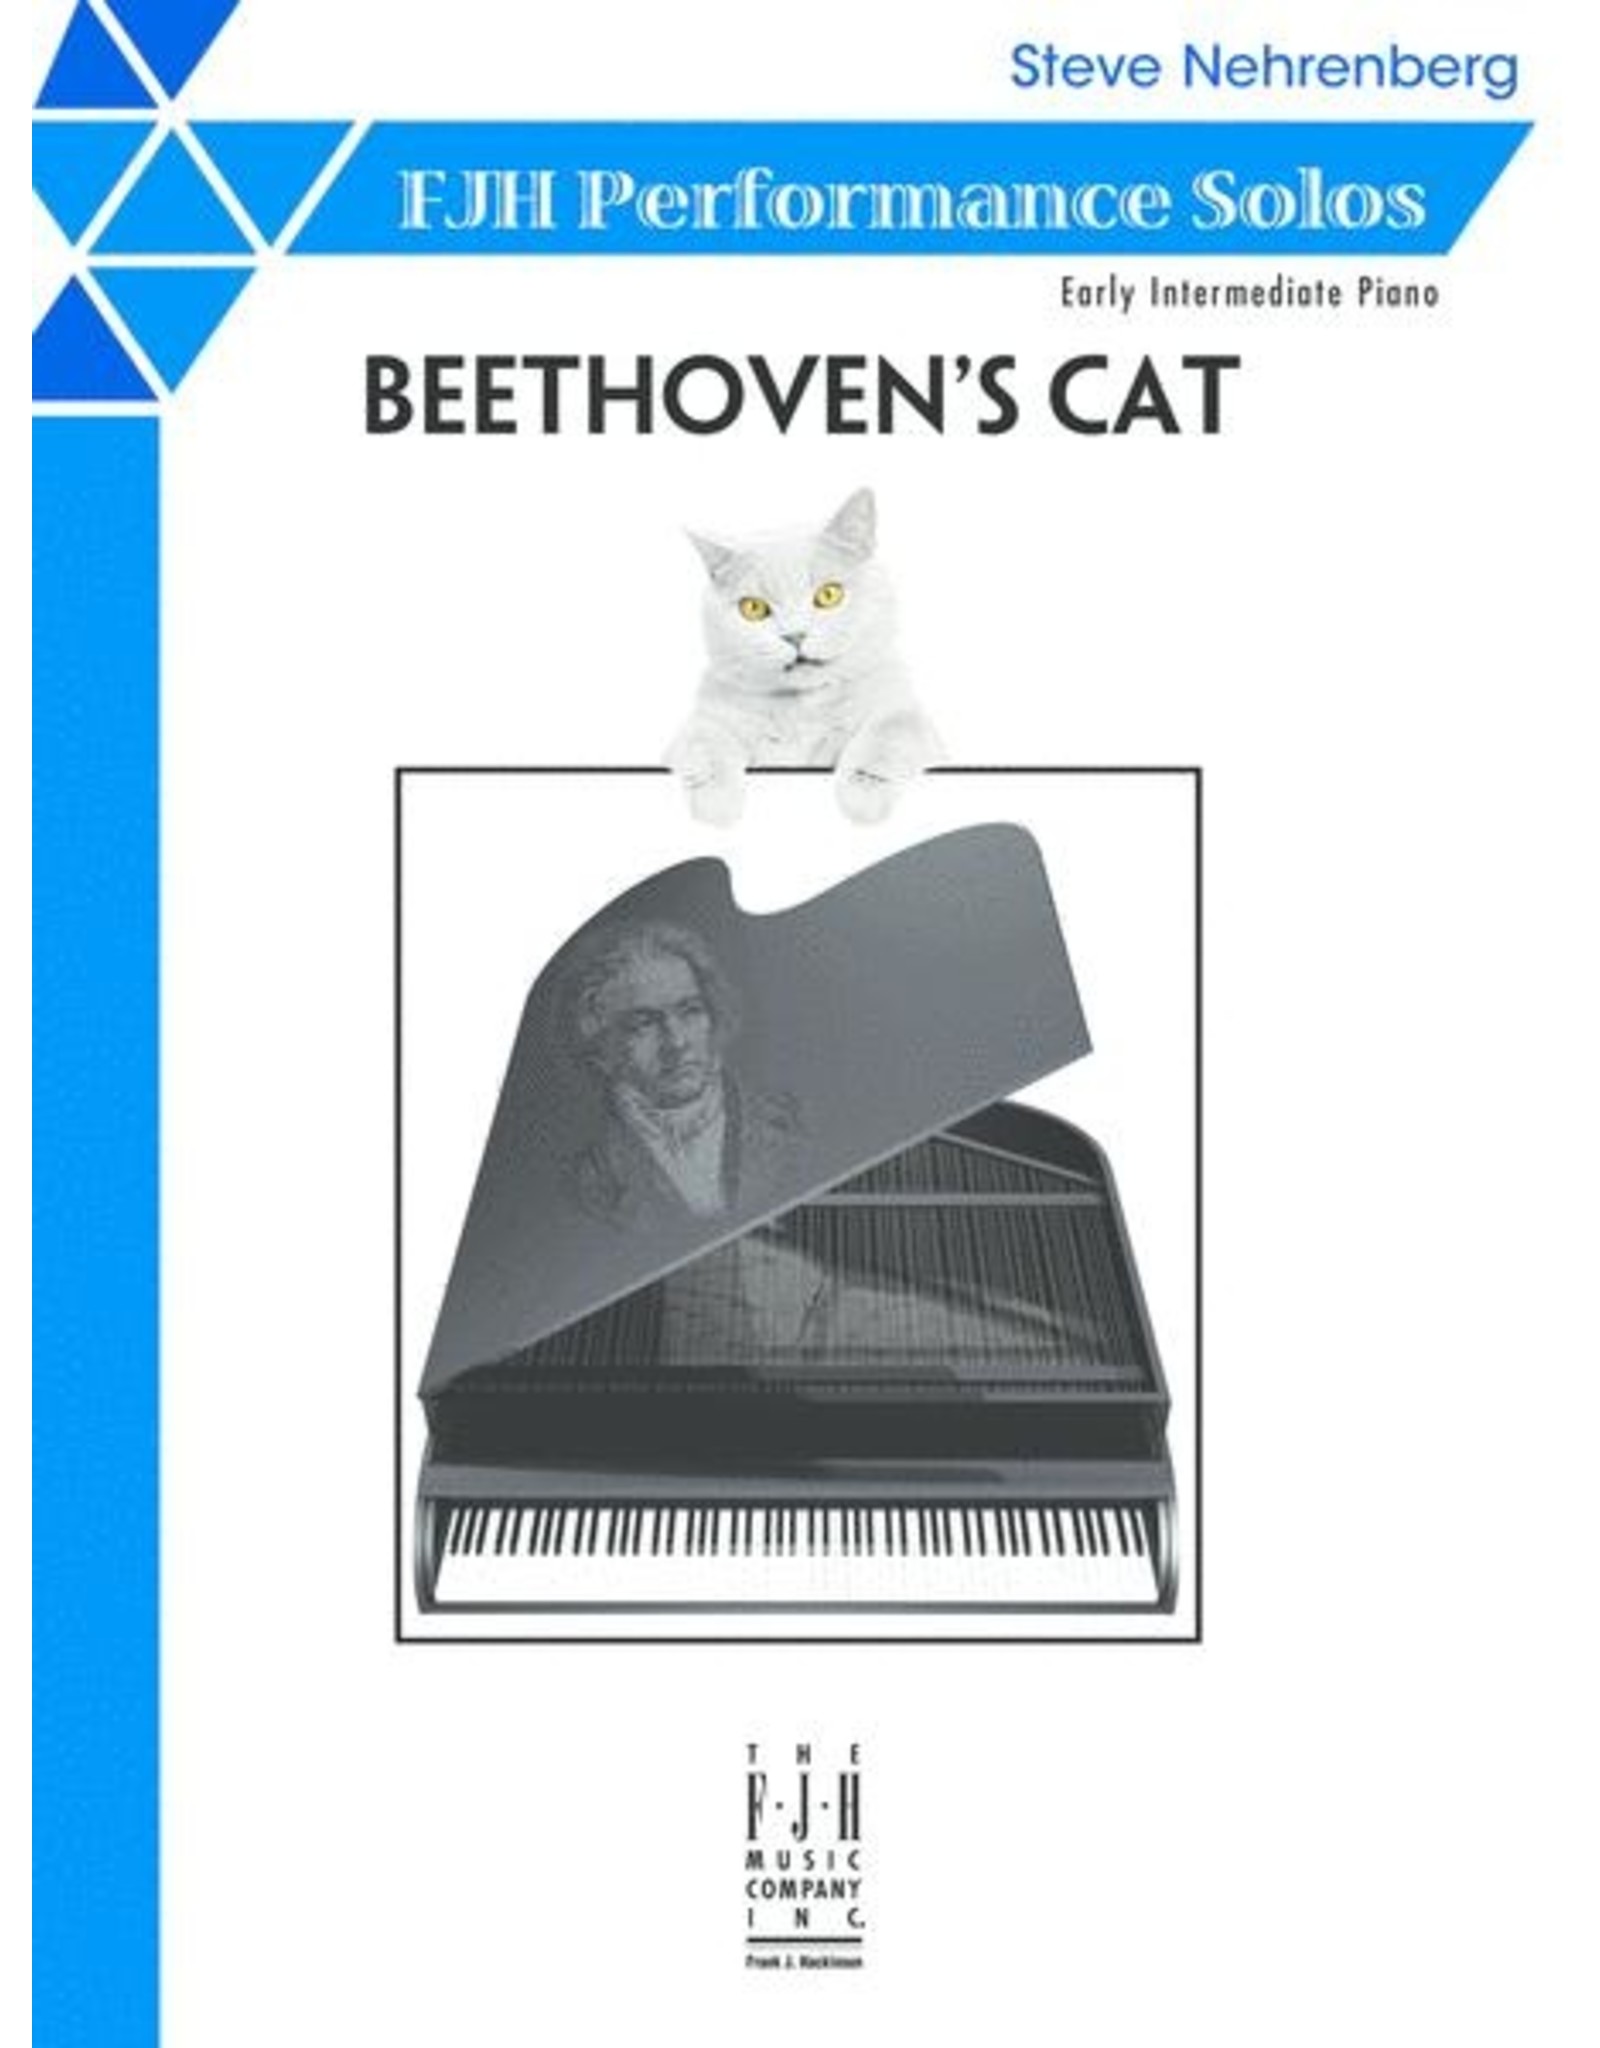 FJH Beethoven's Cat Steve Nehrenberg - Piano Solo Sheet